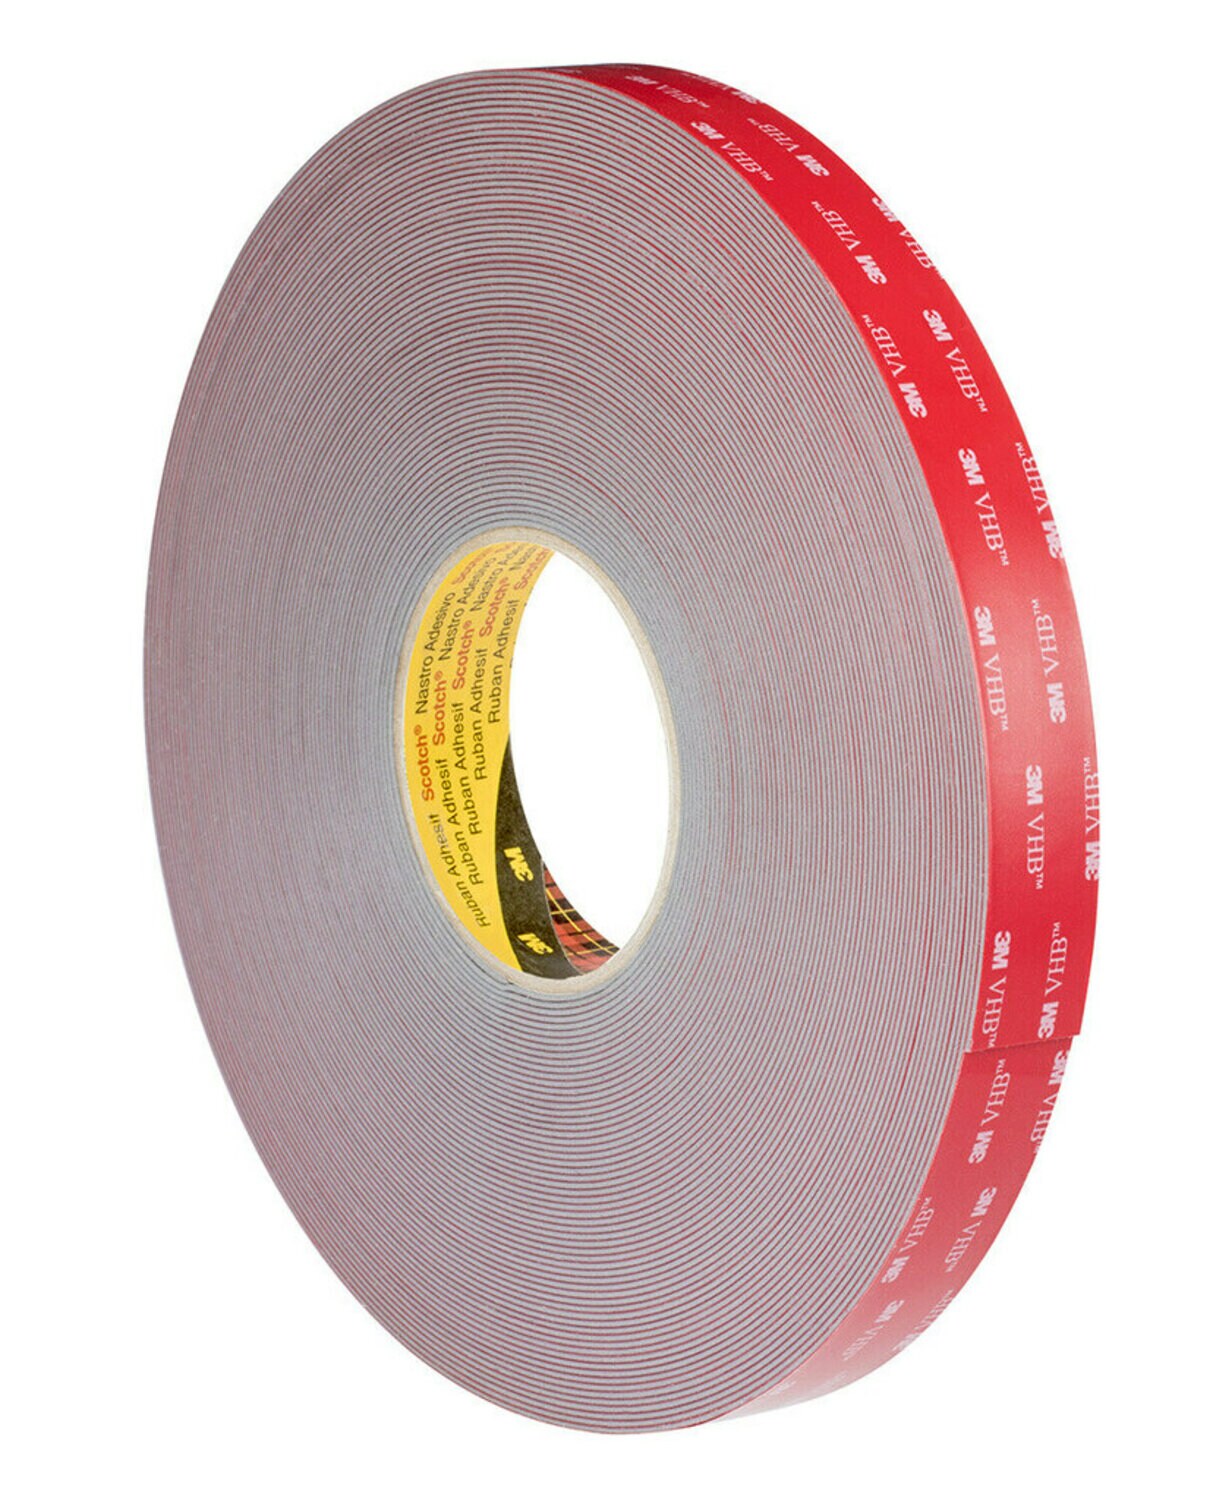 7100169468 - 3M VHB Tape GPH-110GF, Gray, 3/4 in x 36 yd, 45 mil, Film Liner, 12
rolls per case